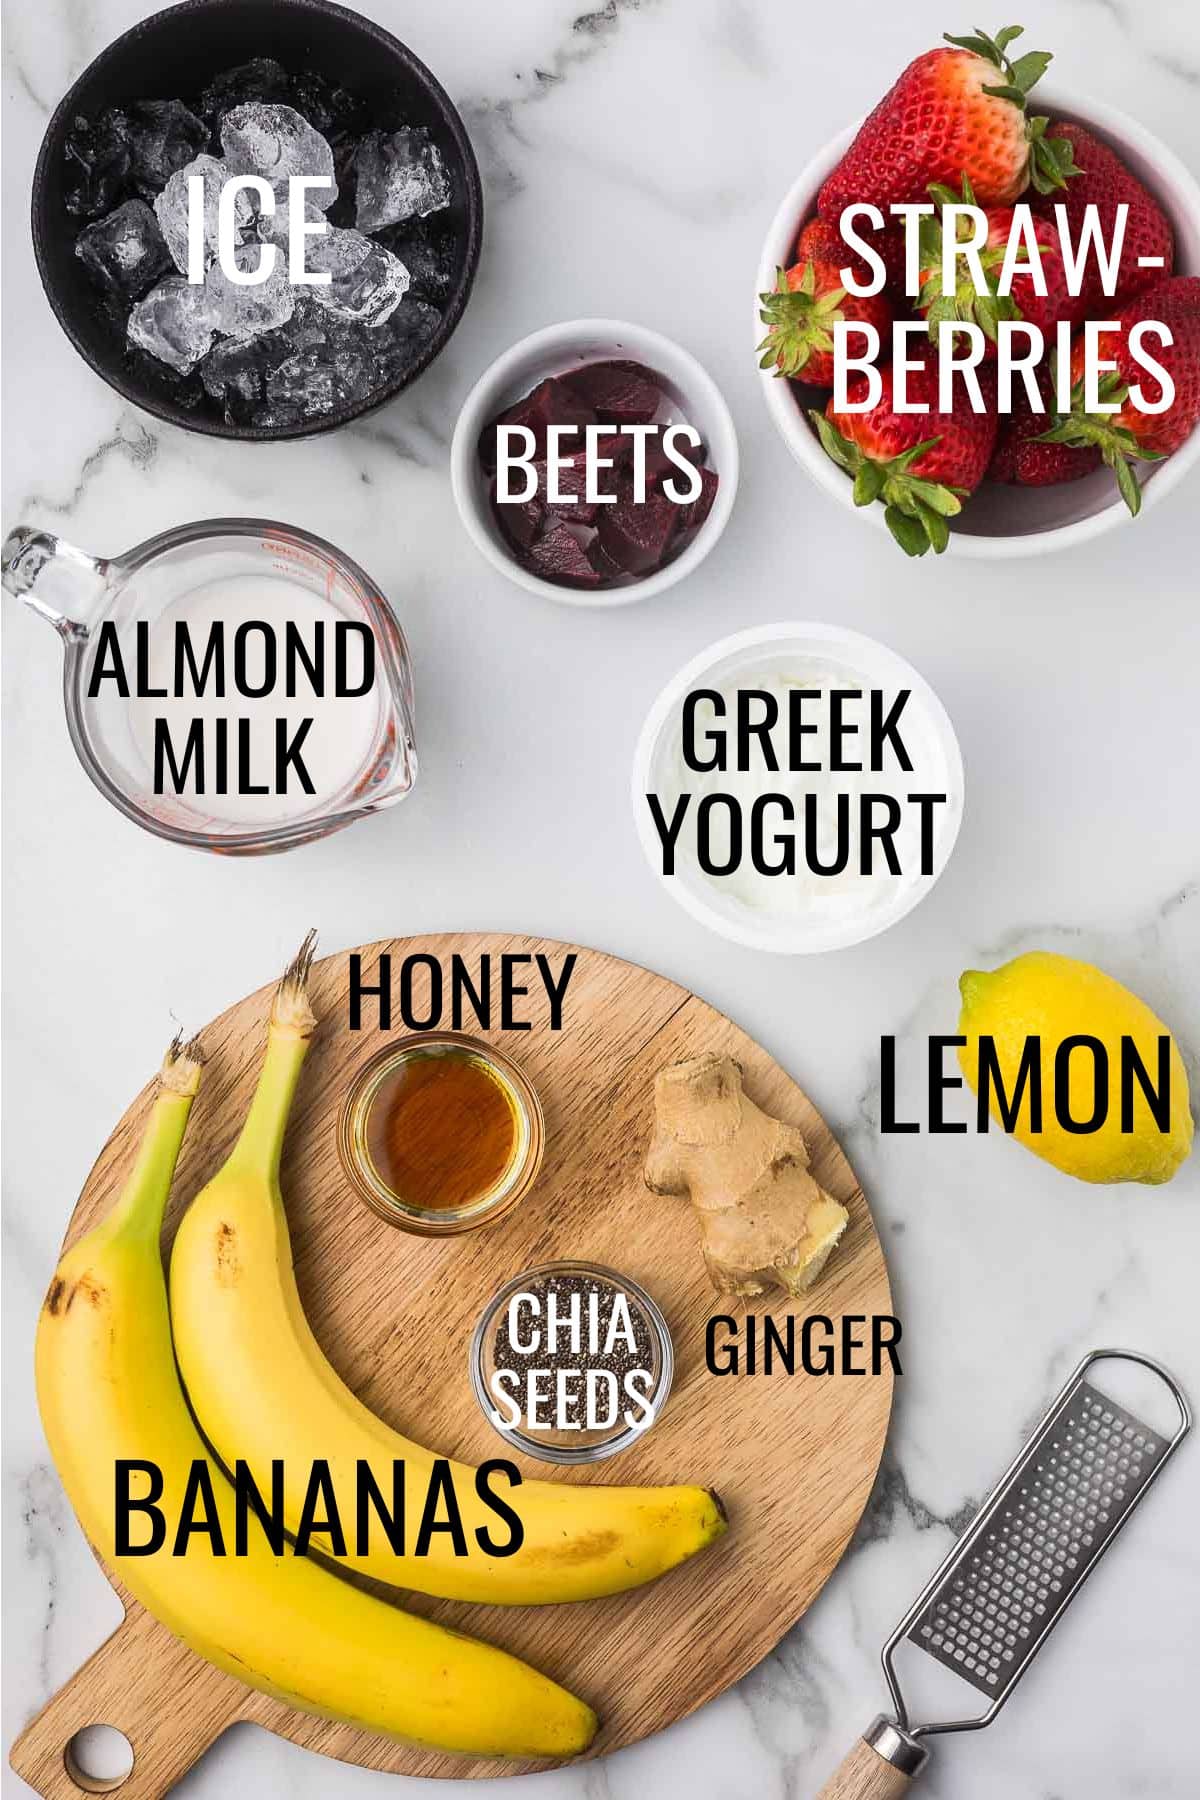 beets, strawberries, bananas, lemon, almond milk, Greek yogurt, ginger, honey, chia seeds, and ice in small bowls